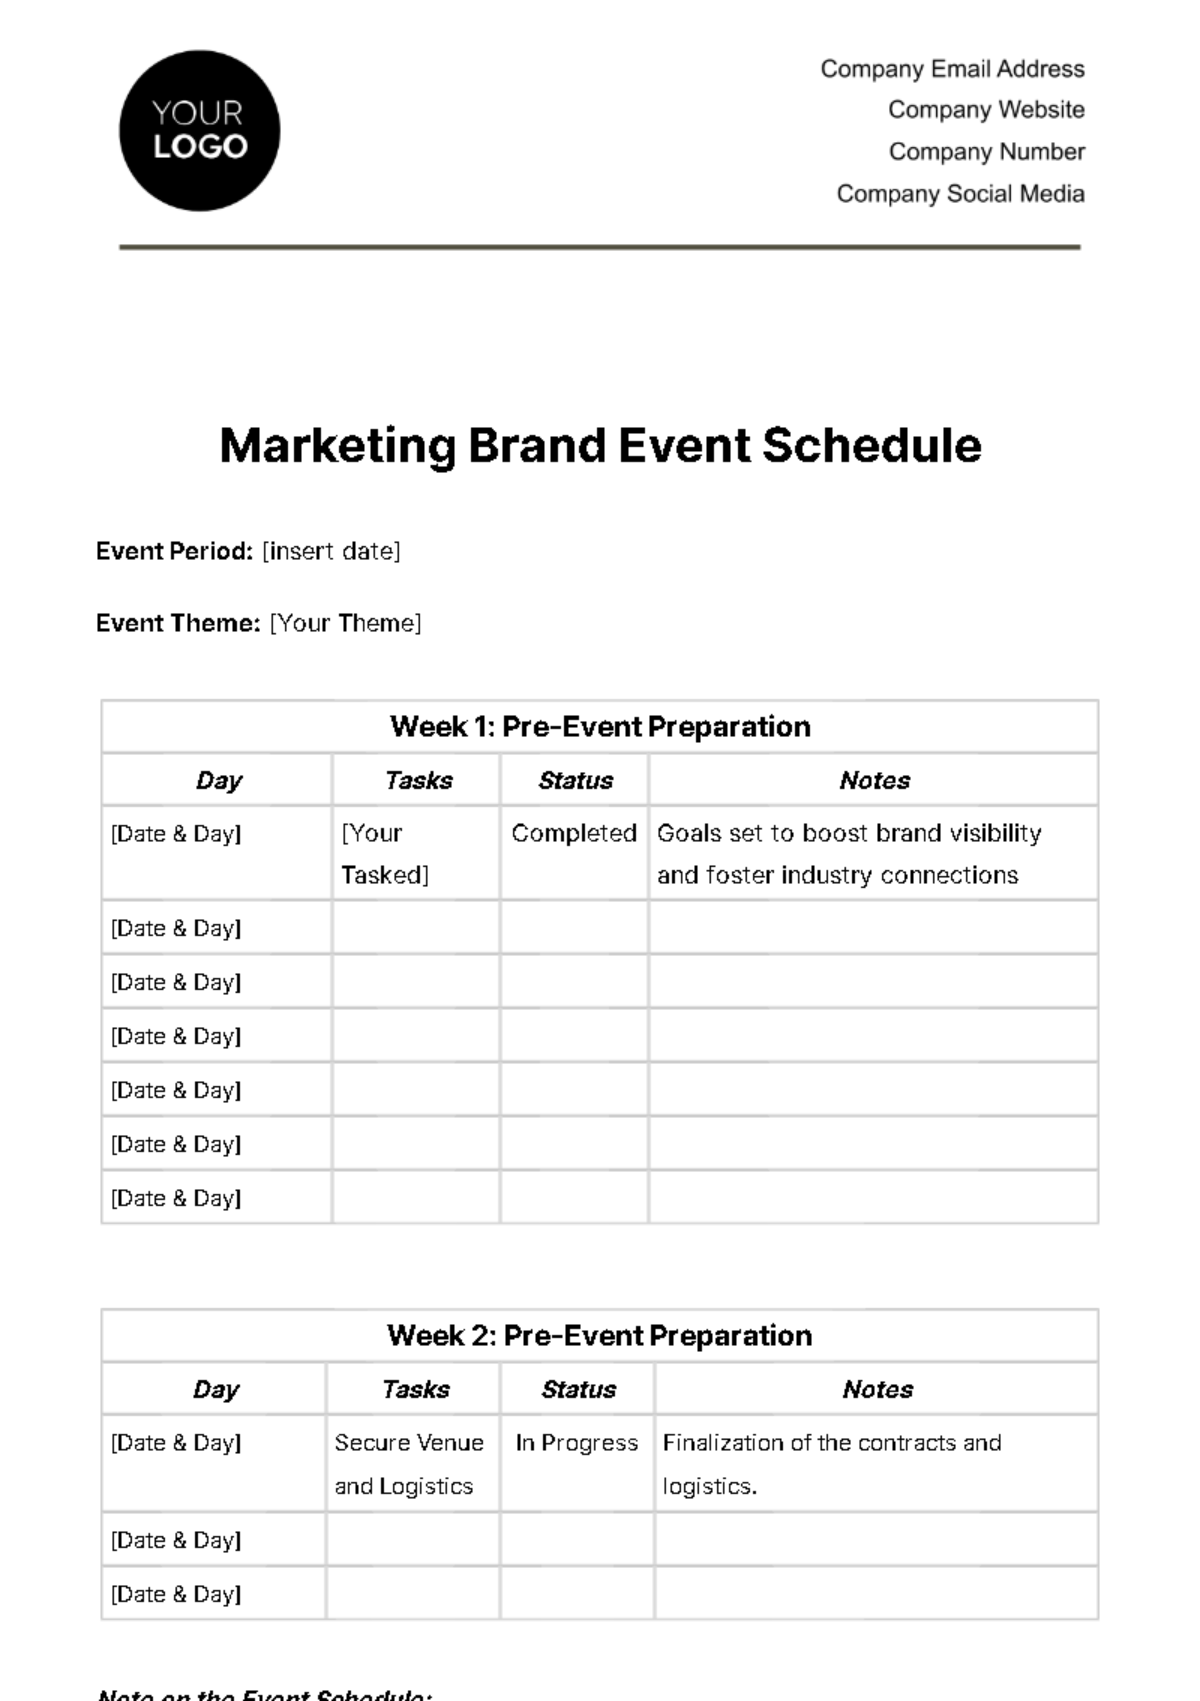 Marketing Brand Event Schedule Template